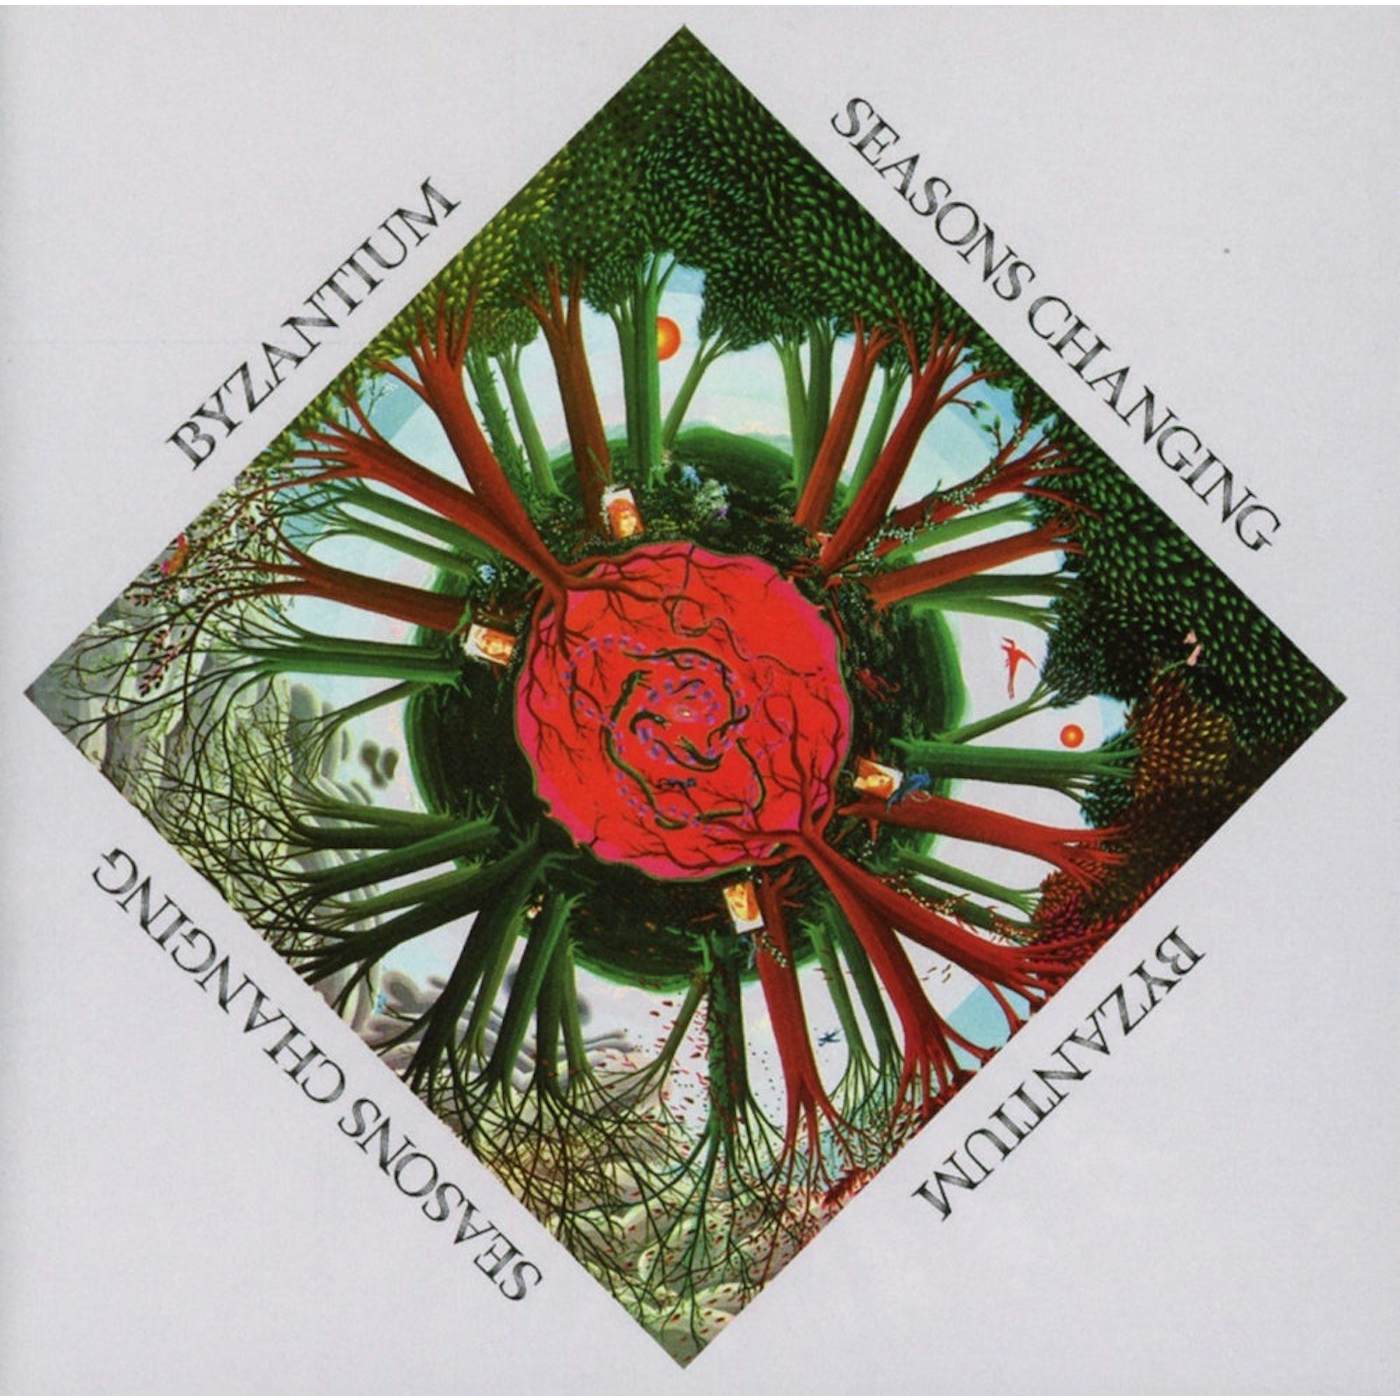 Byzantium LP - Seasons Changing (Vinyl)